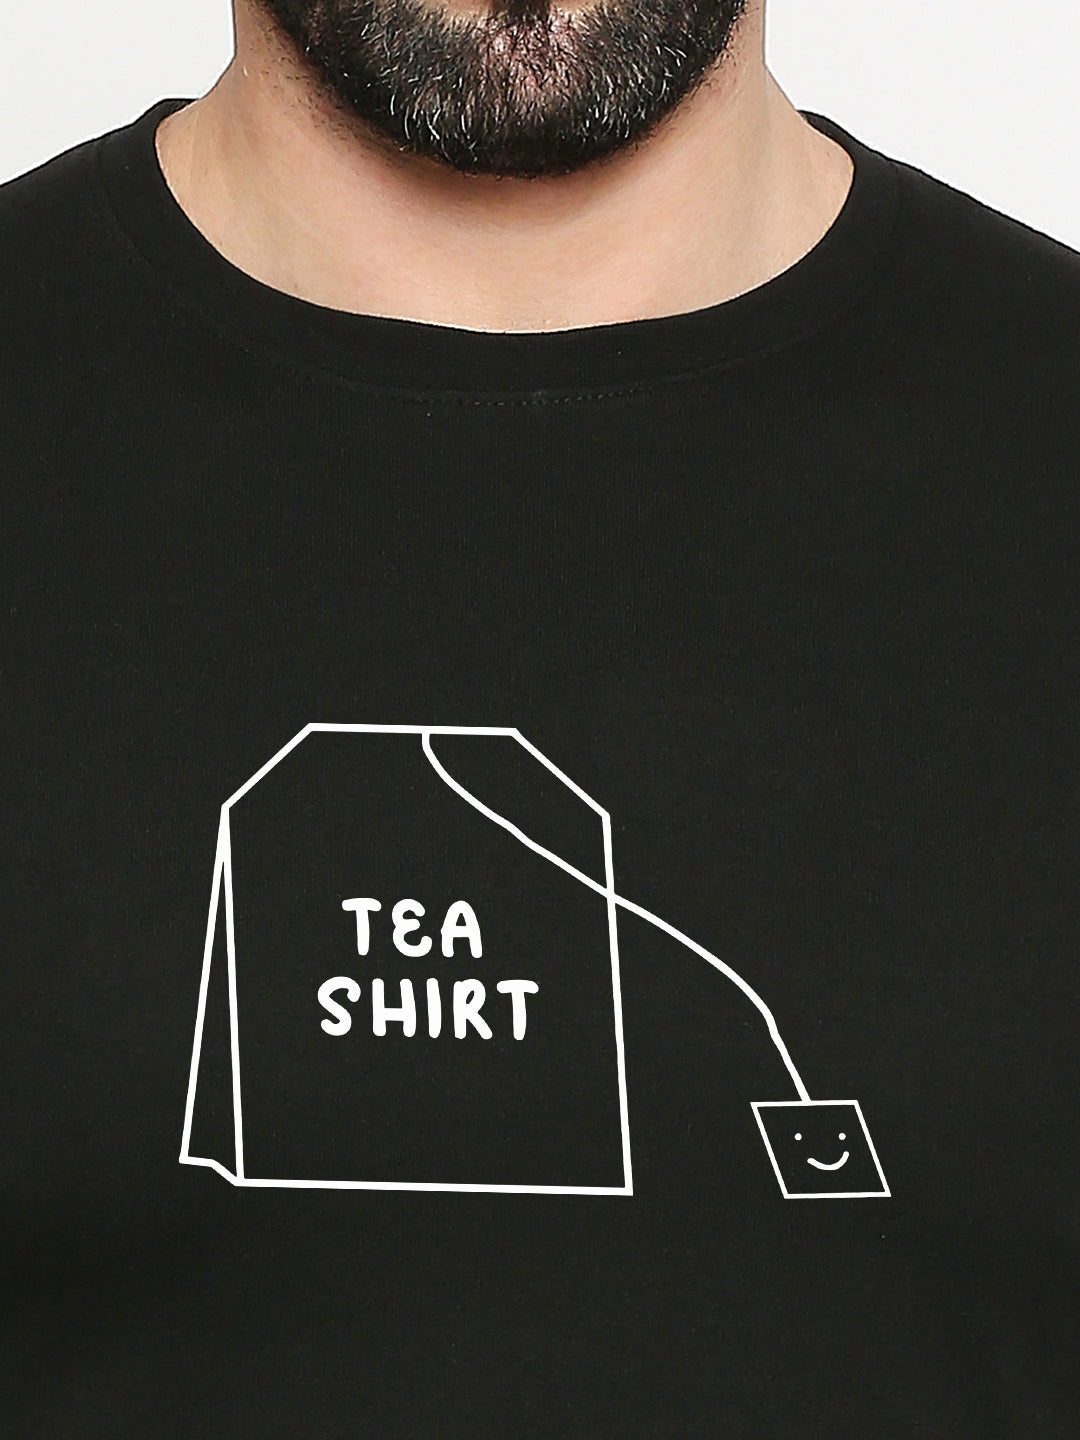 "Tea Shirt" Funny T-Shirt